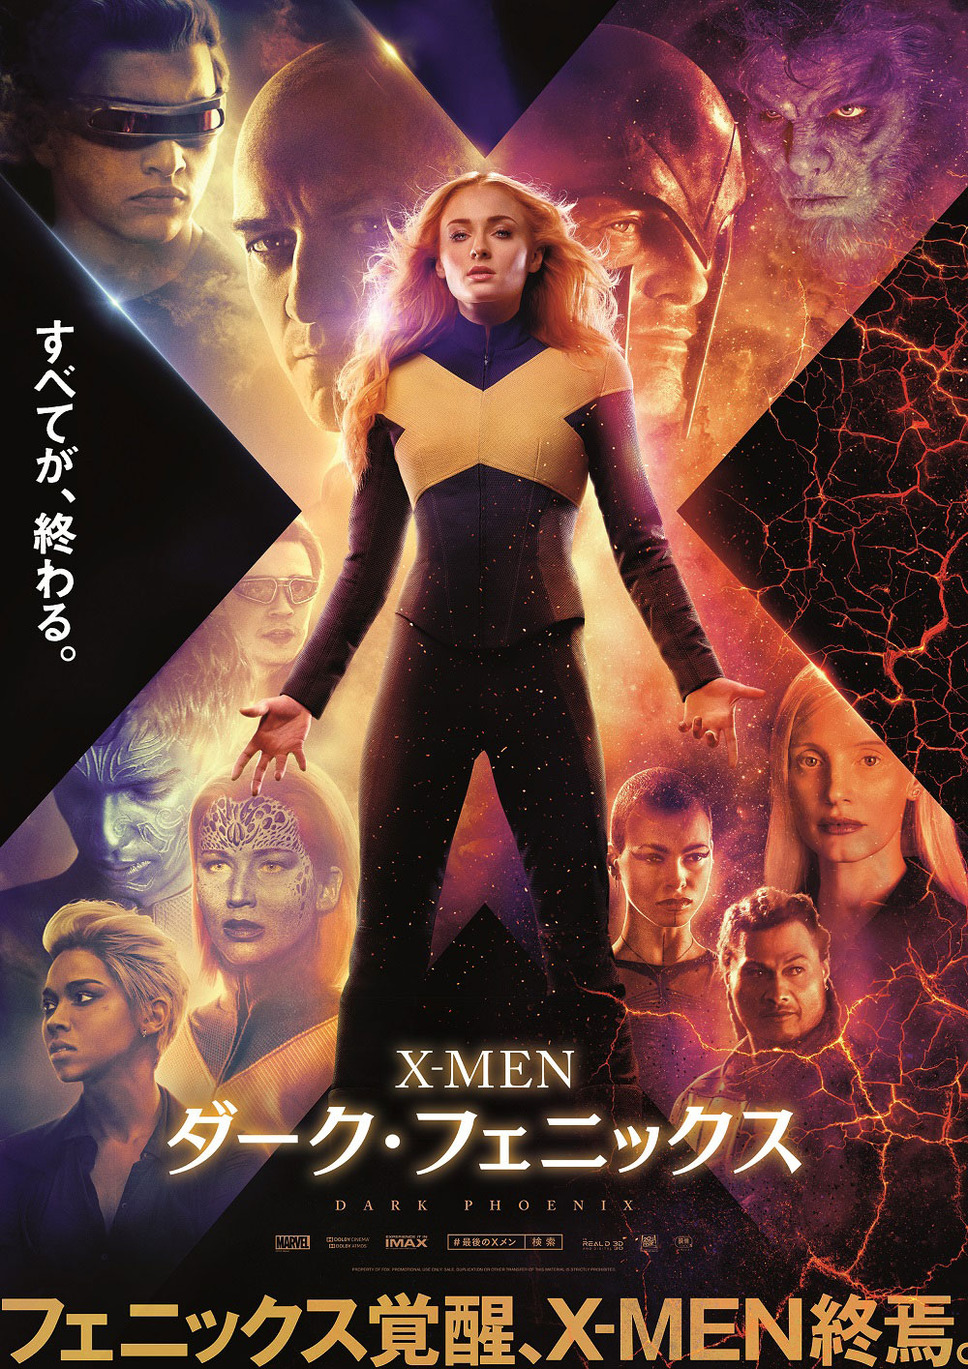 X Men シリーズ全12作まとめ 観るべき順番 時系列を解説 21年版 2 4